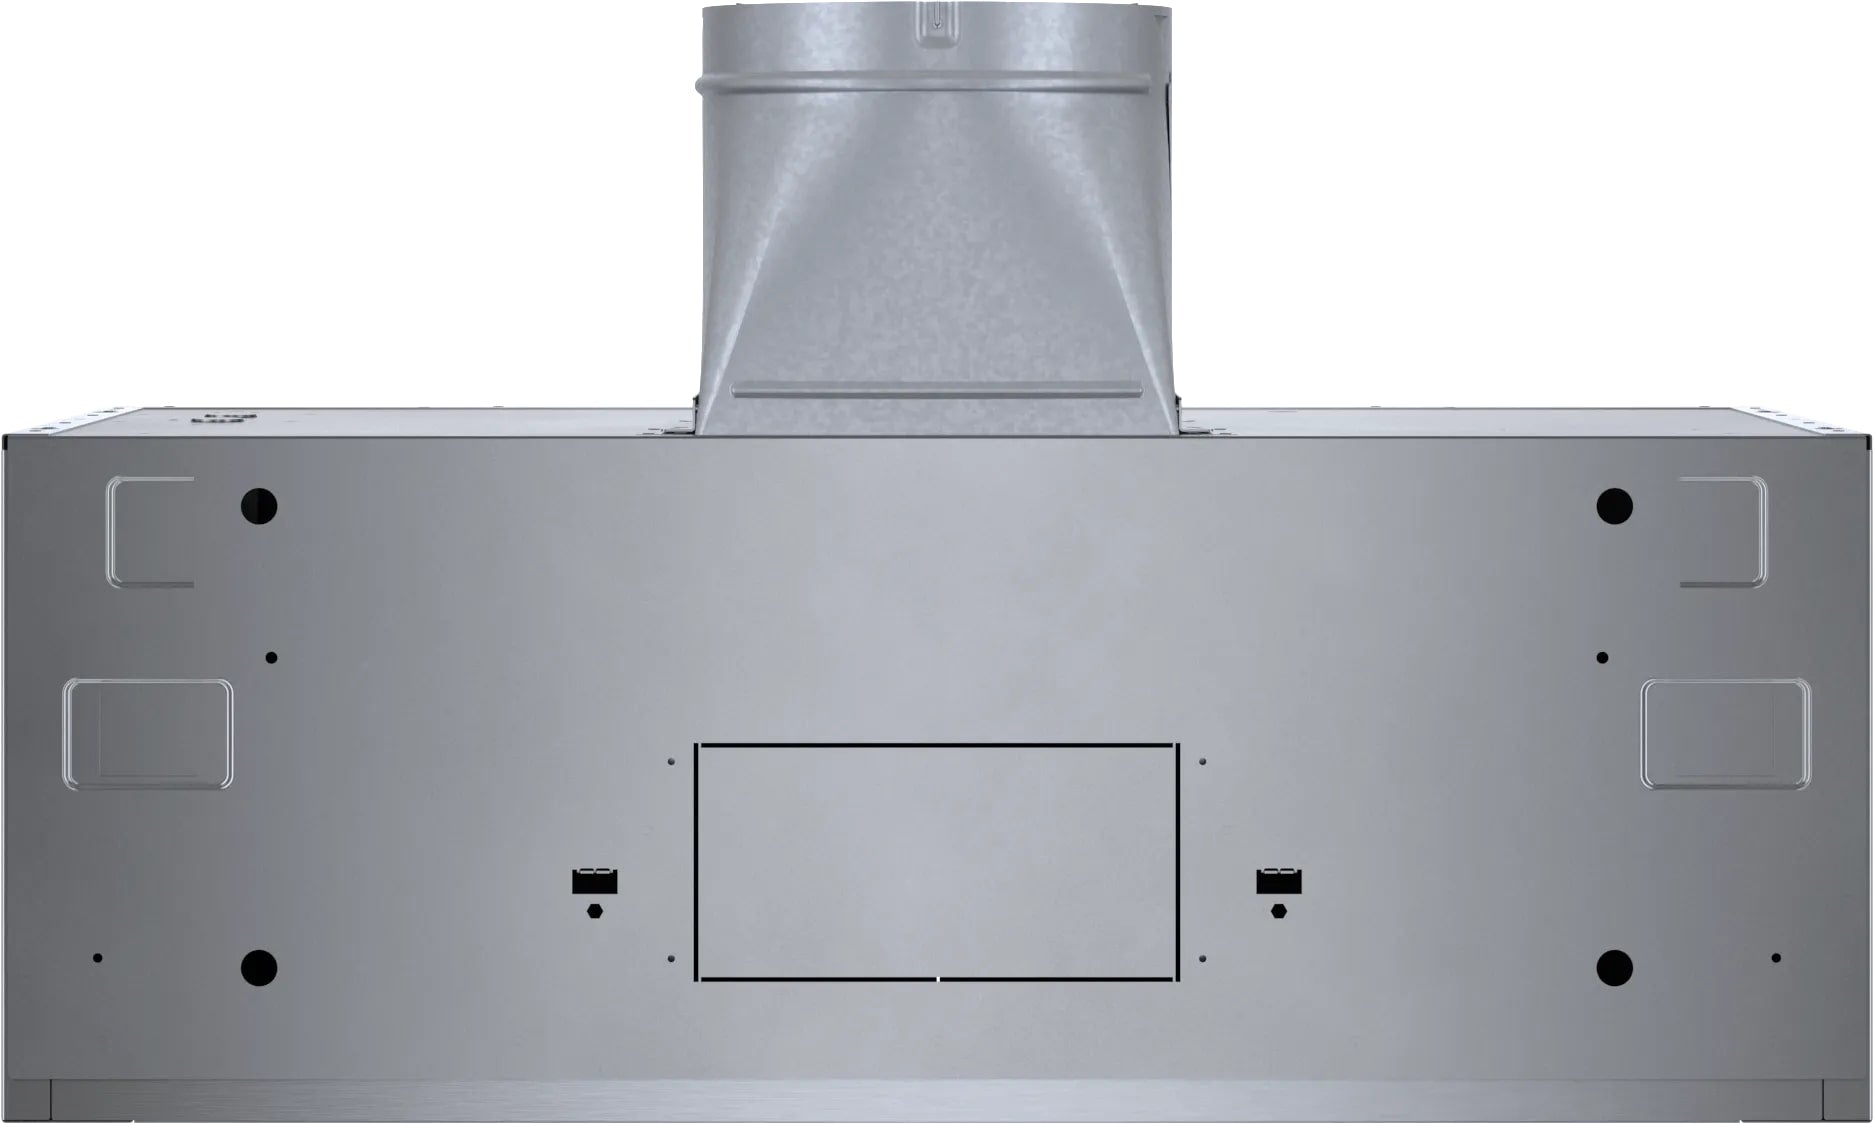 Bosch - 30 Inch 600 CFM Under Cabinet Range Vent in Stainless - DPH30652UC